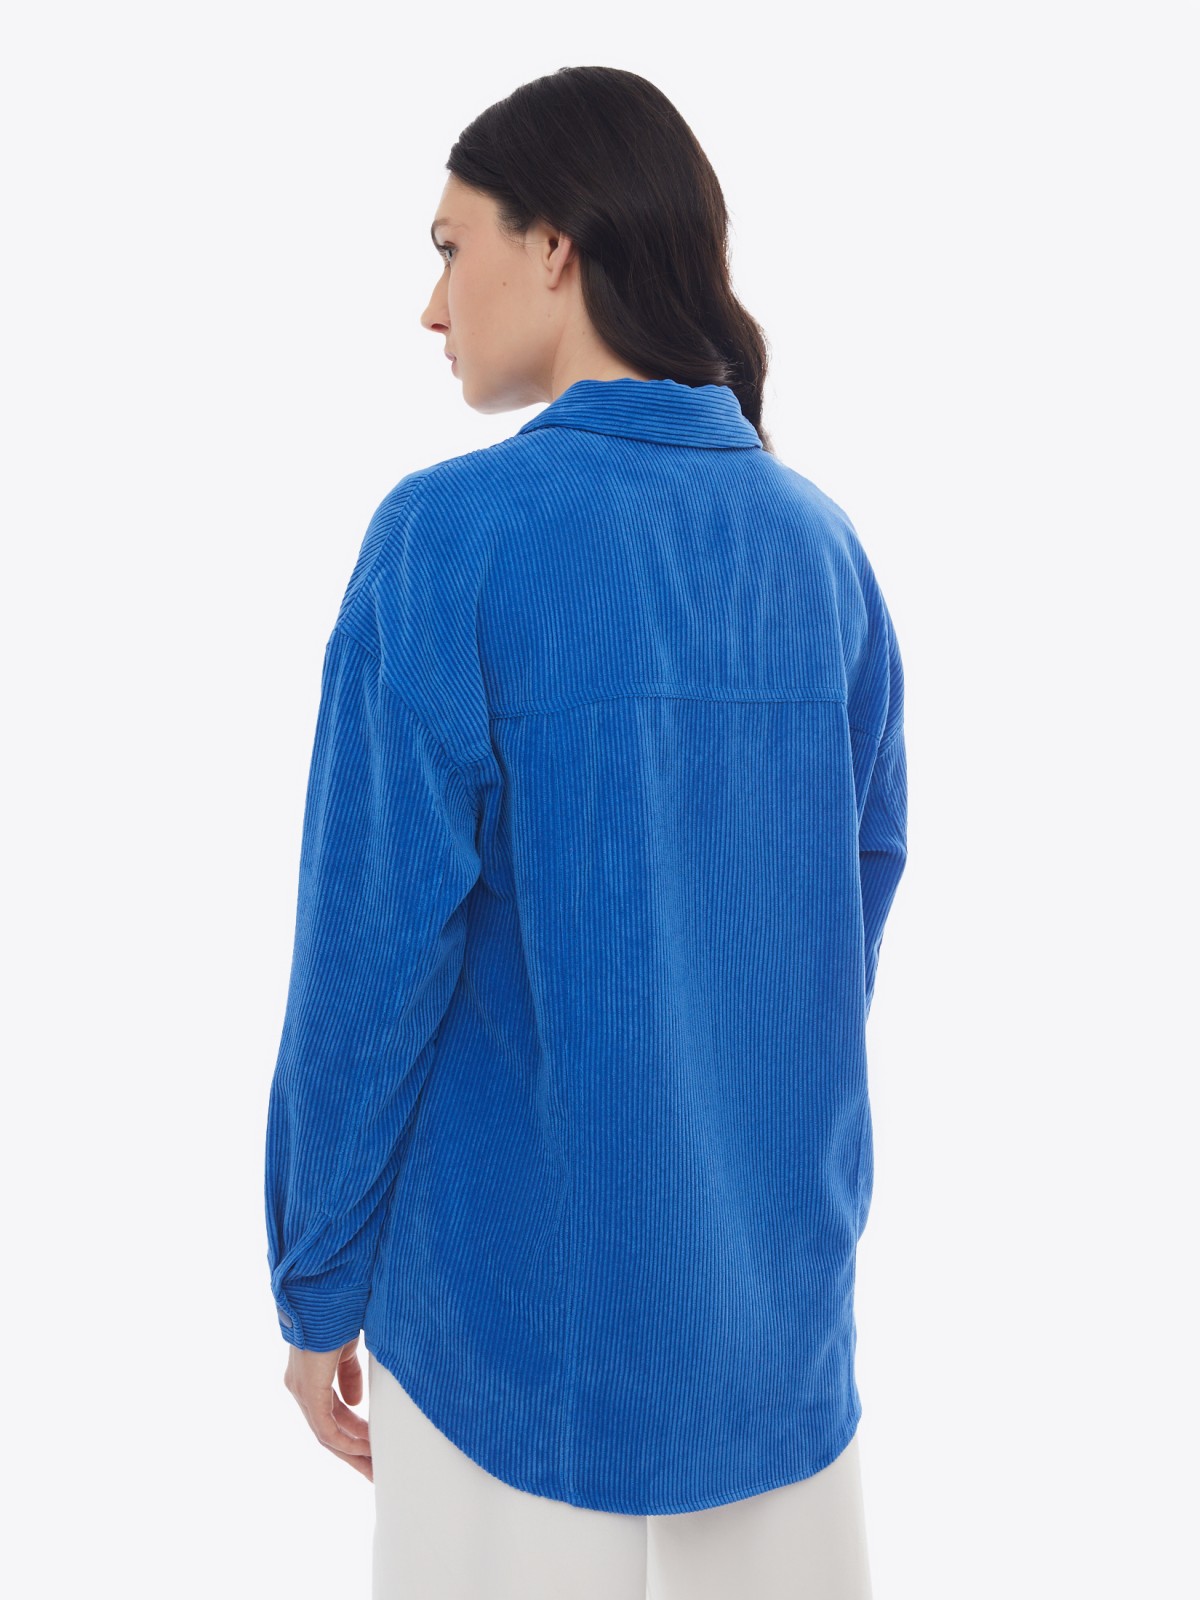 Куртка-рубашка объёмного силуэта из вельвета zolla 02412540L023, цвет голубой, размер XS - фото 5